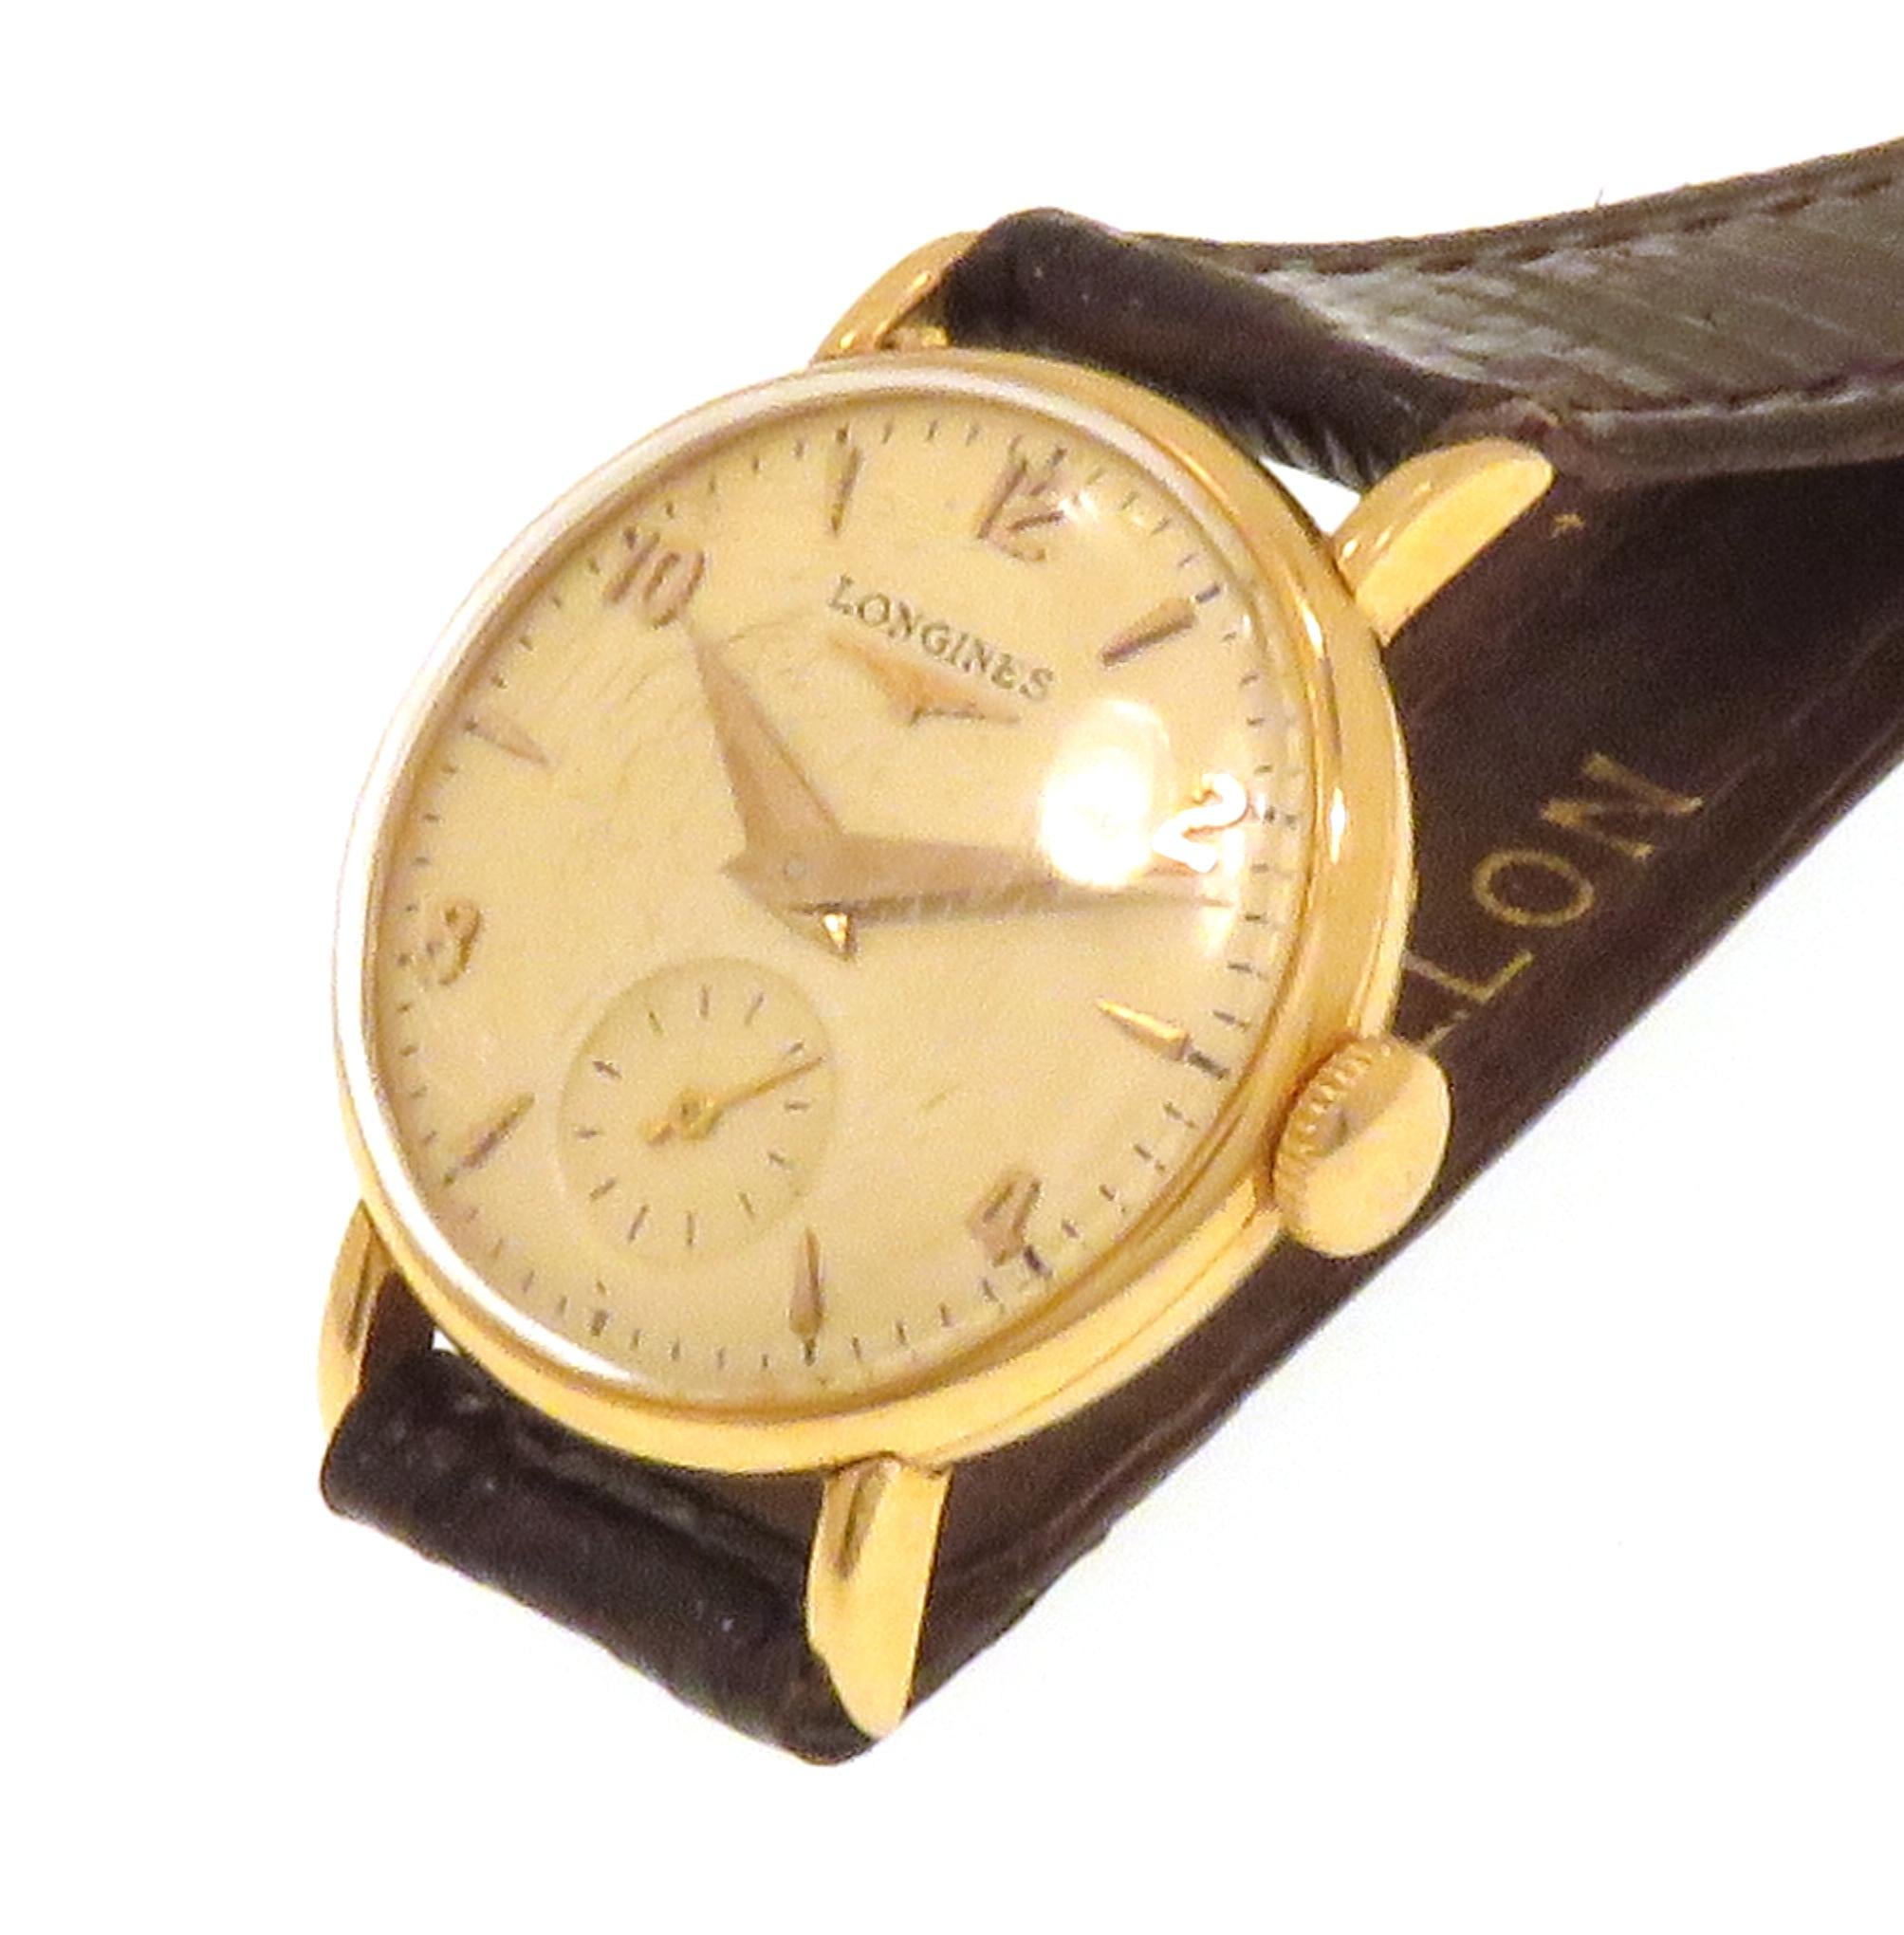 Retro Longines 18k Yellow Gold Wrist Watch with Leather Strap